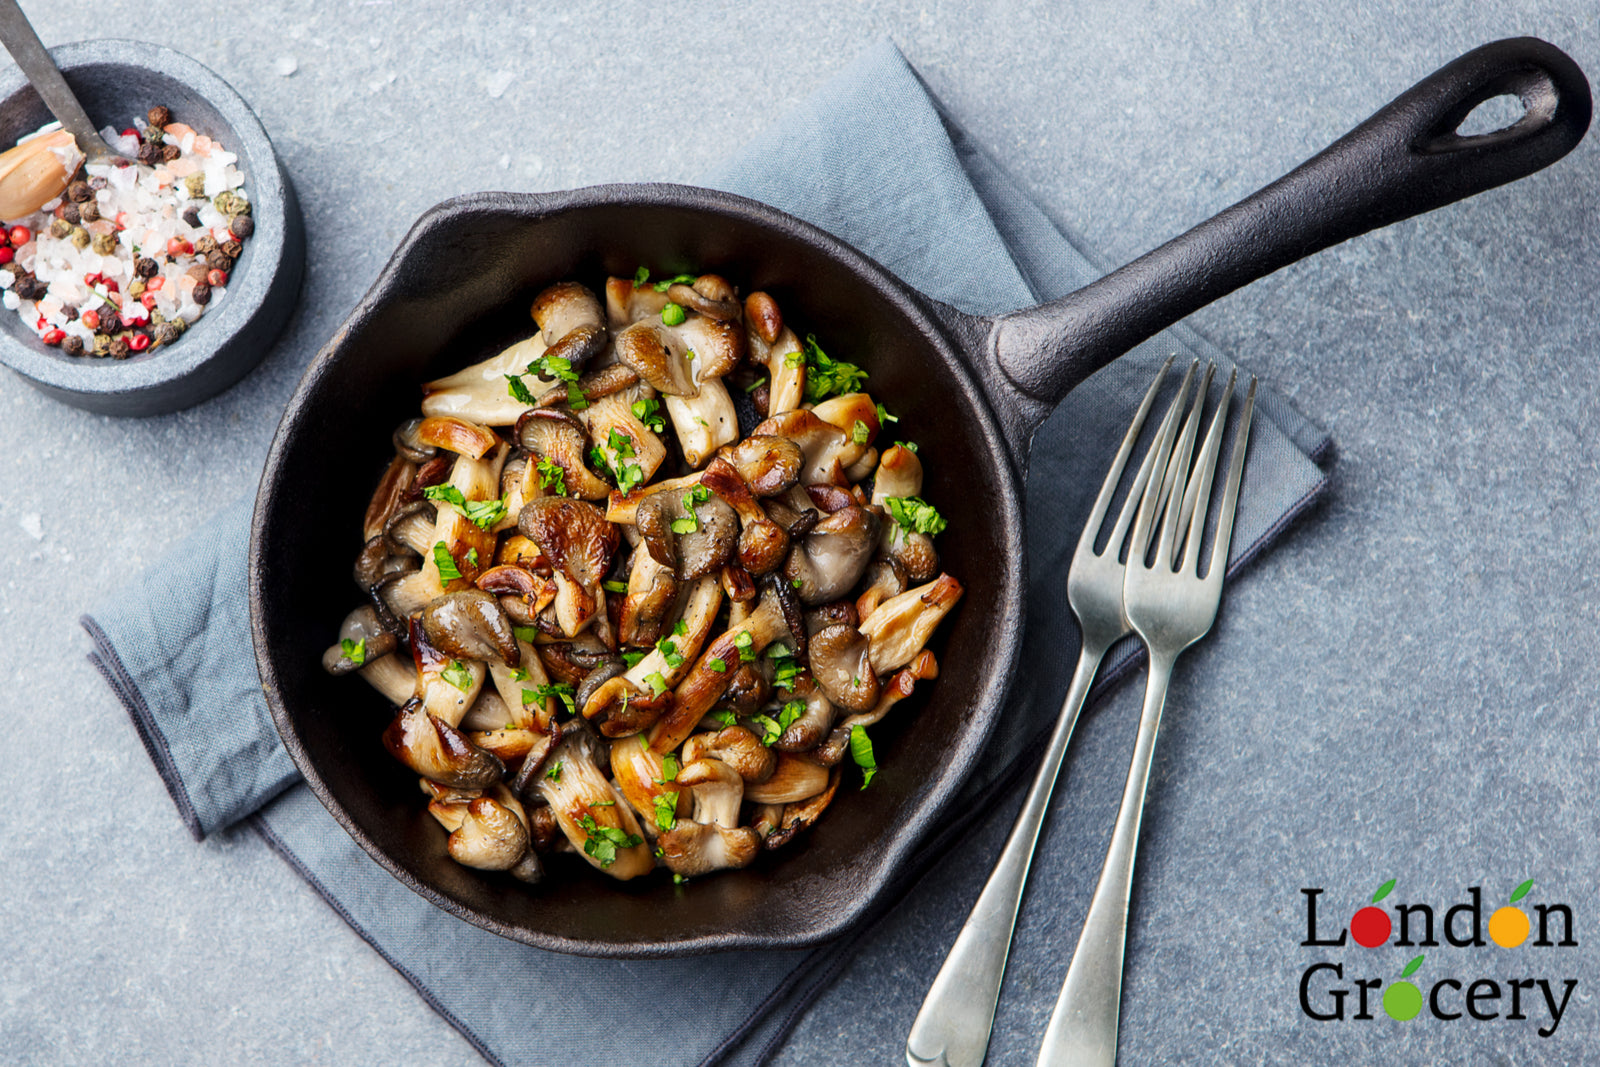 Oyster Mushroom Recipe | London Grocery